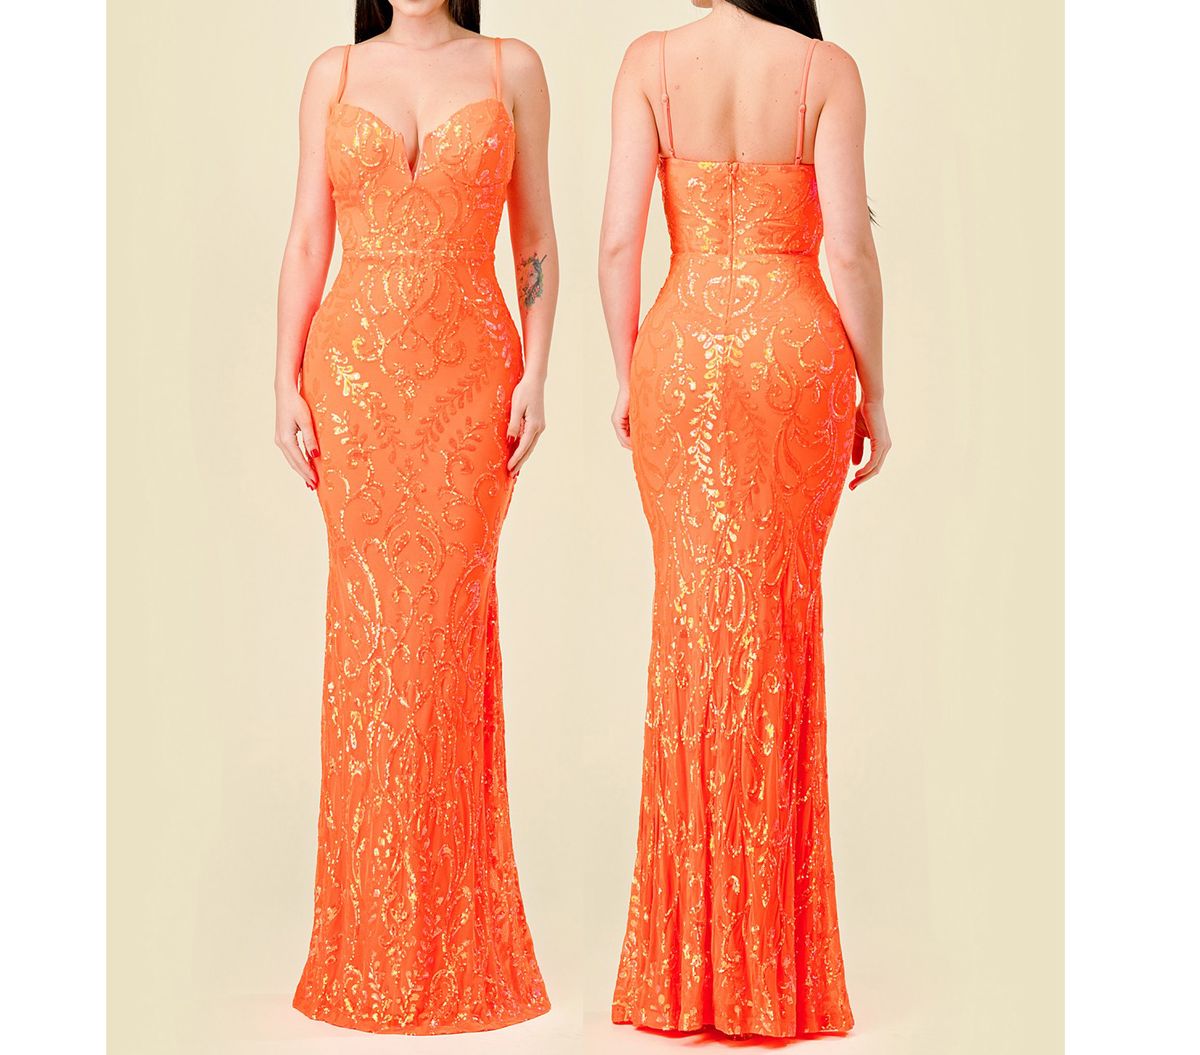 Style Formal Neon Orange Sequin Prom Wedding Guest Mermaid Dress Size 2 Prom Plunge Orange Mermaid Dress on Queenly